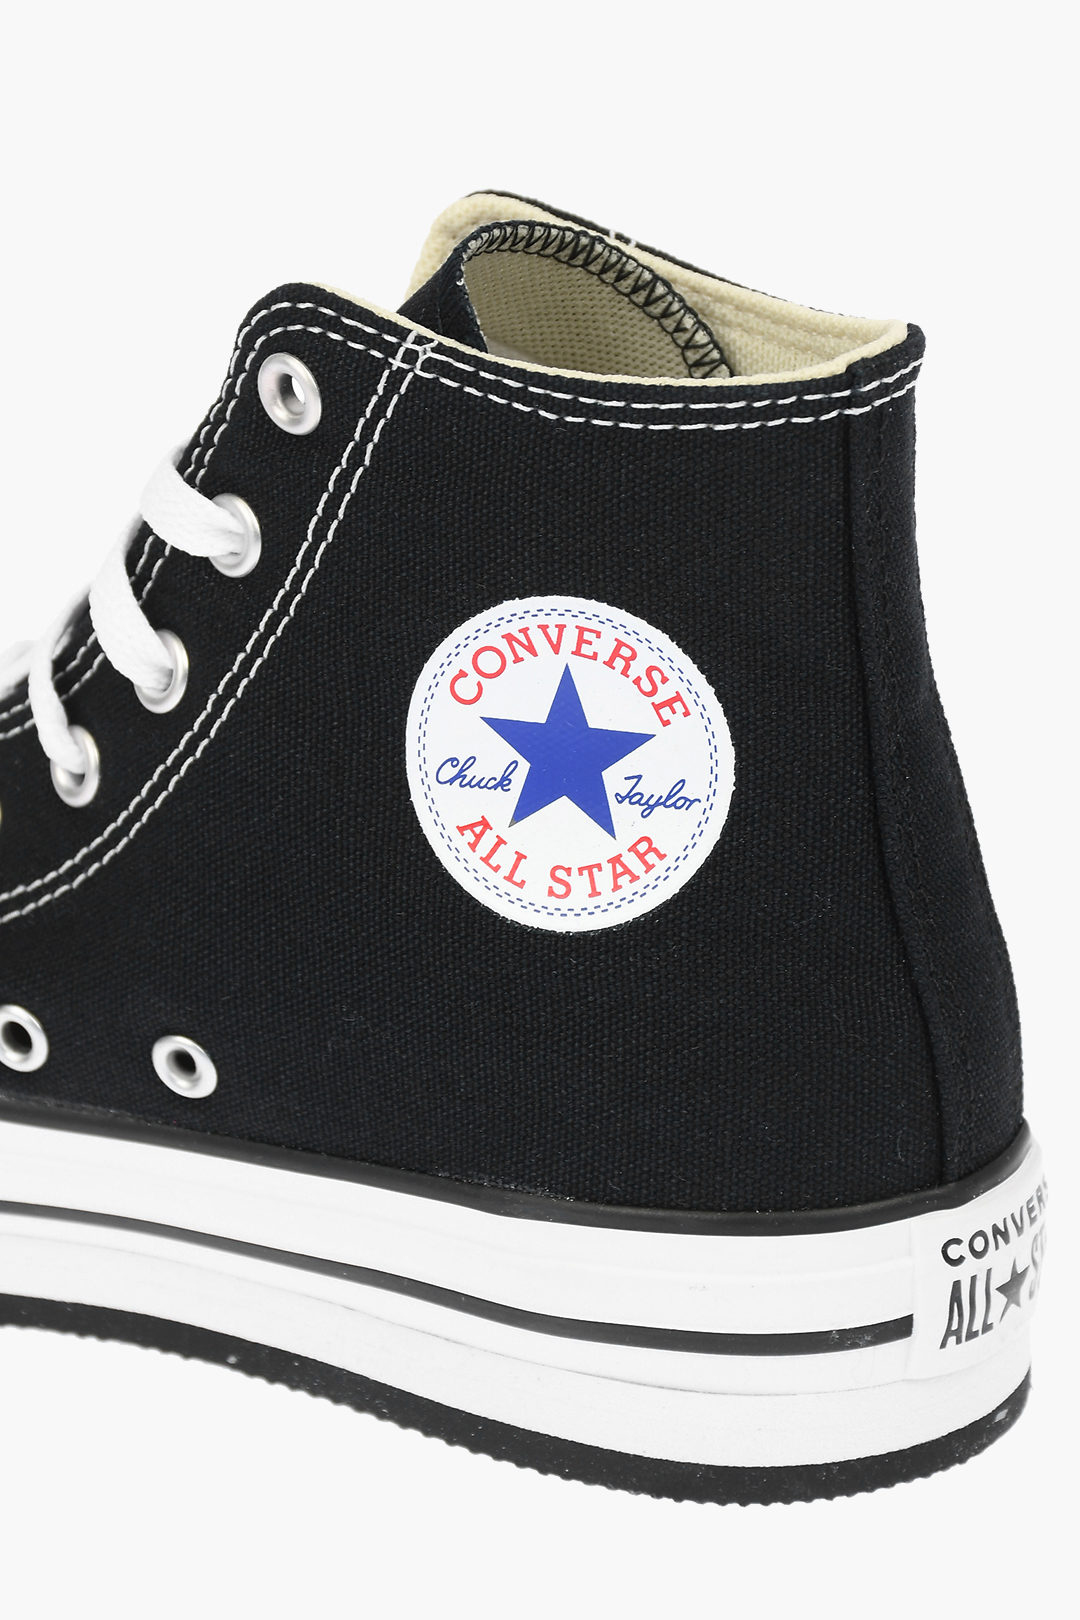 Converse KIDS ALL STAR Fabric EVA LIFT Sneakers unisex children boys girls  - Glamood Outlet